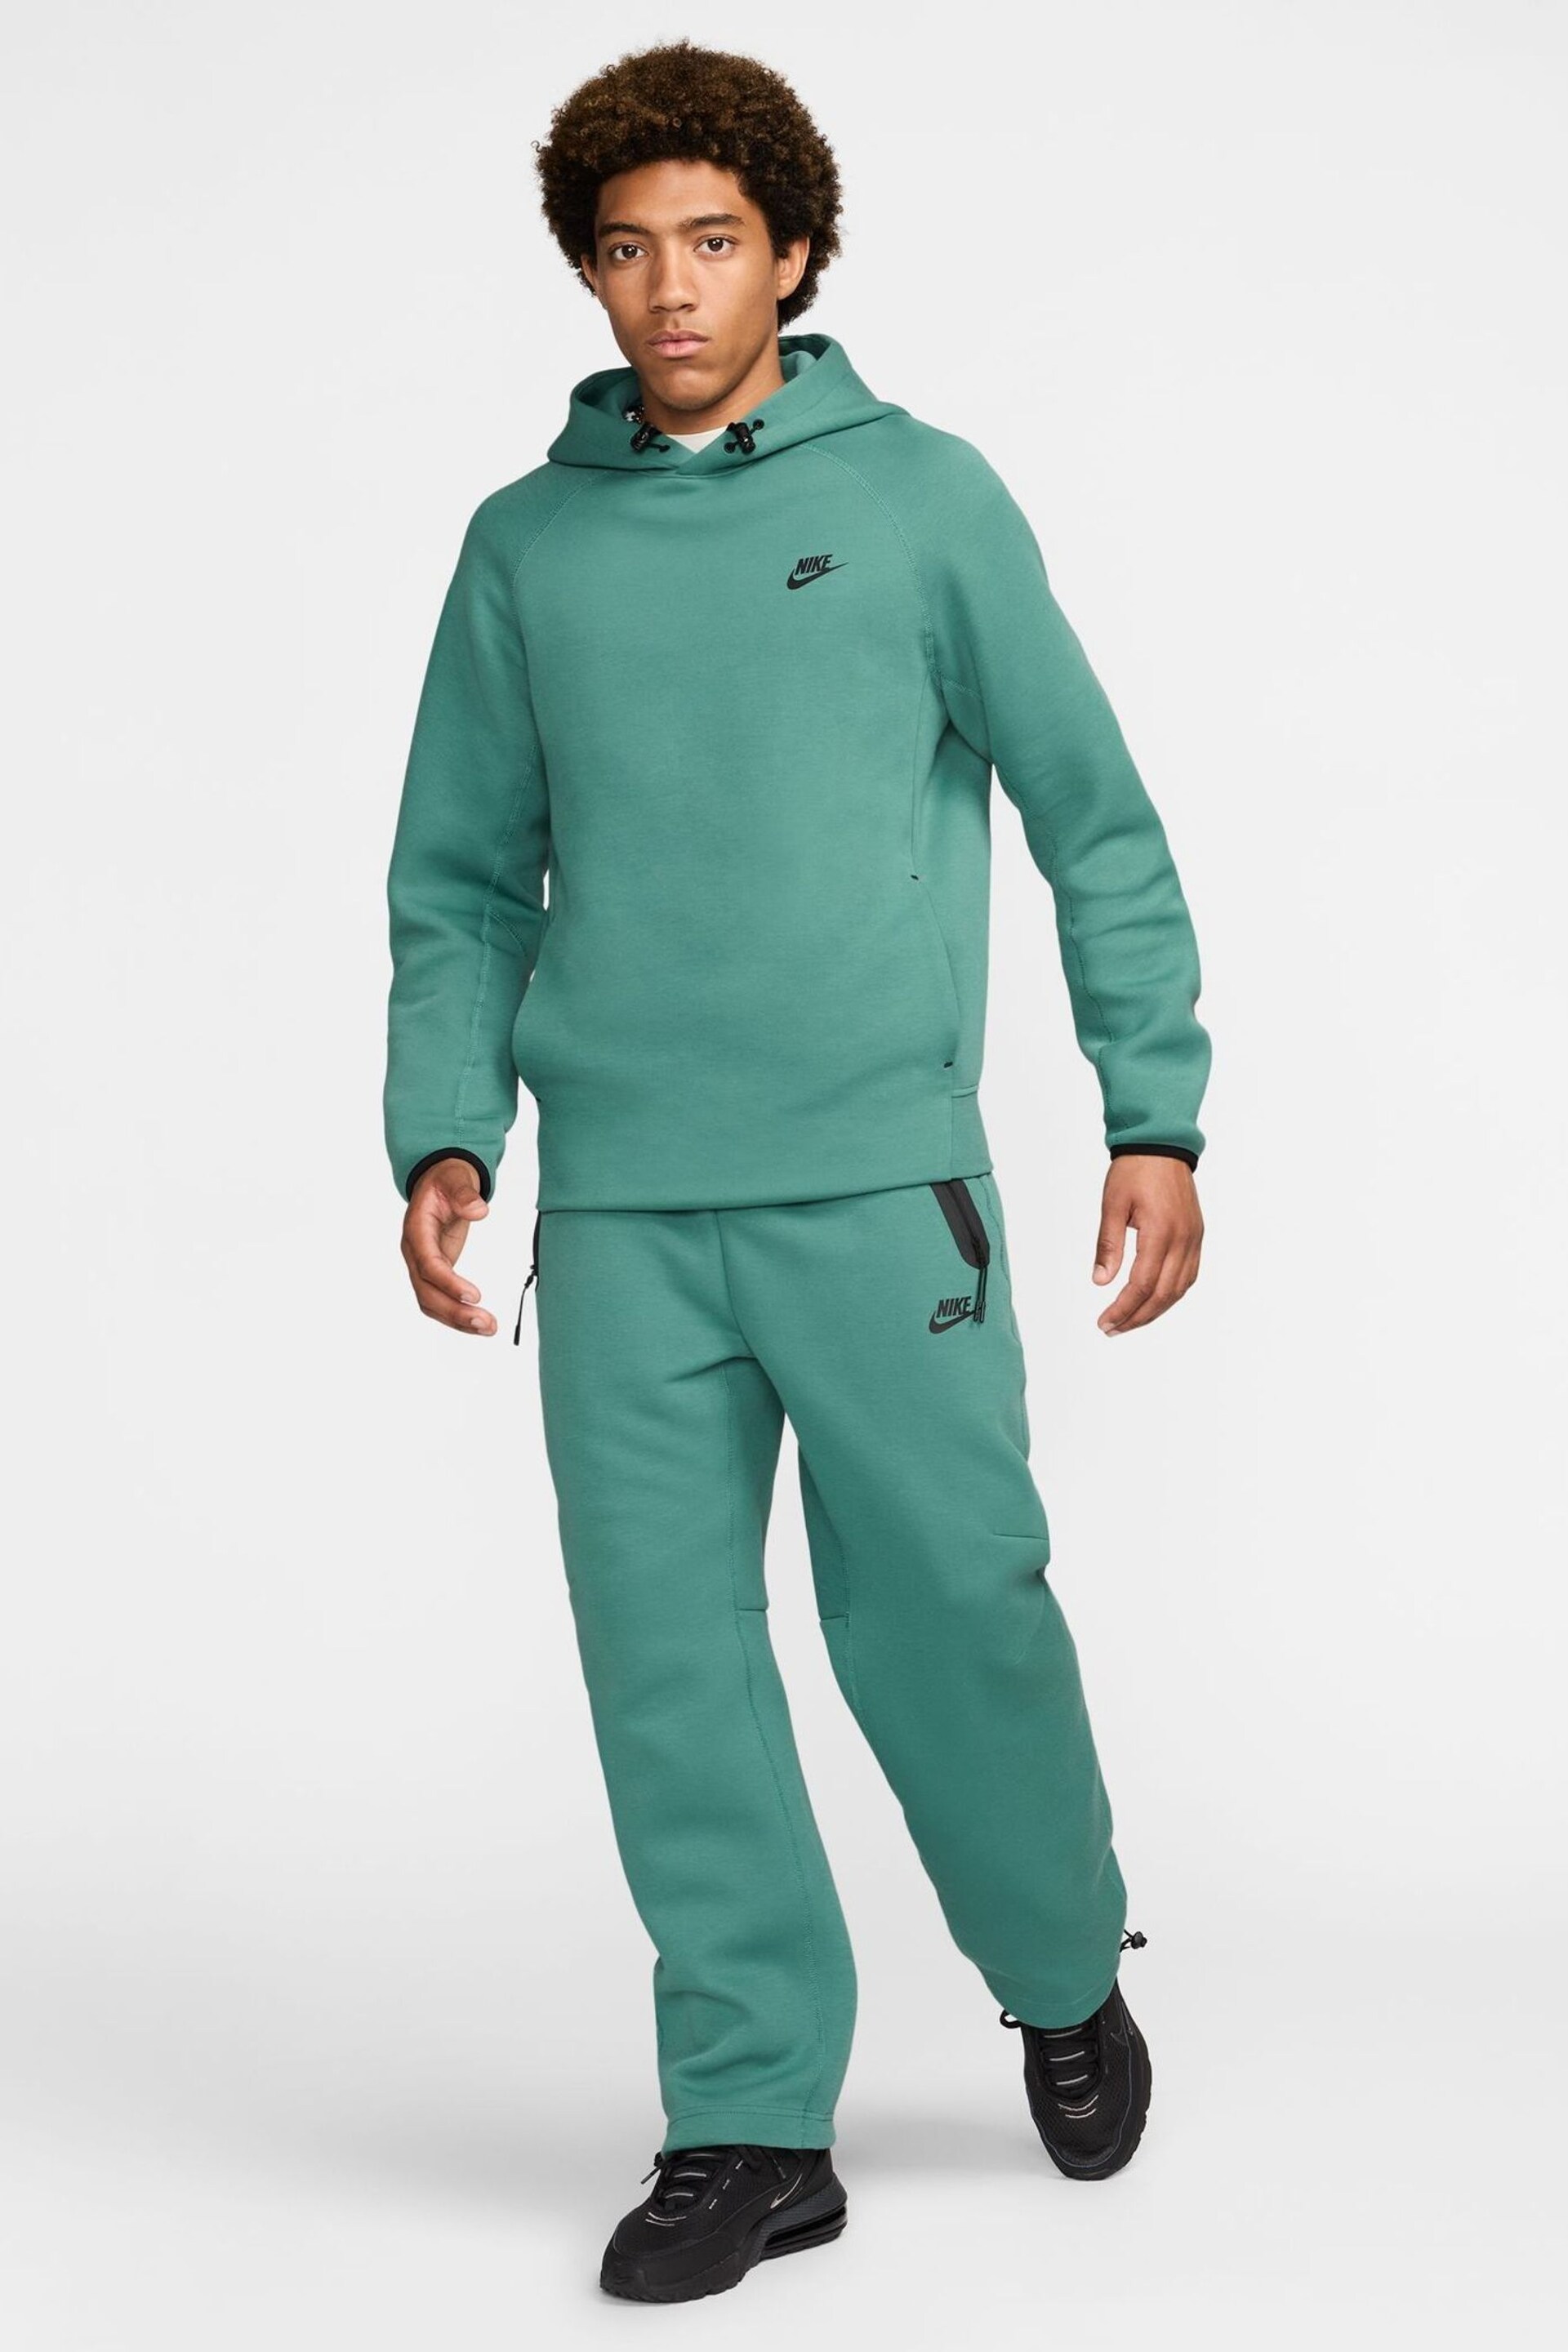 Nike Green/Black Tech Fleece Pullover Hoodie - Image 9 of 11